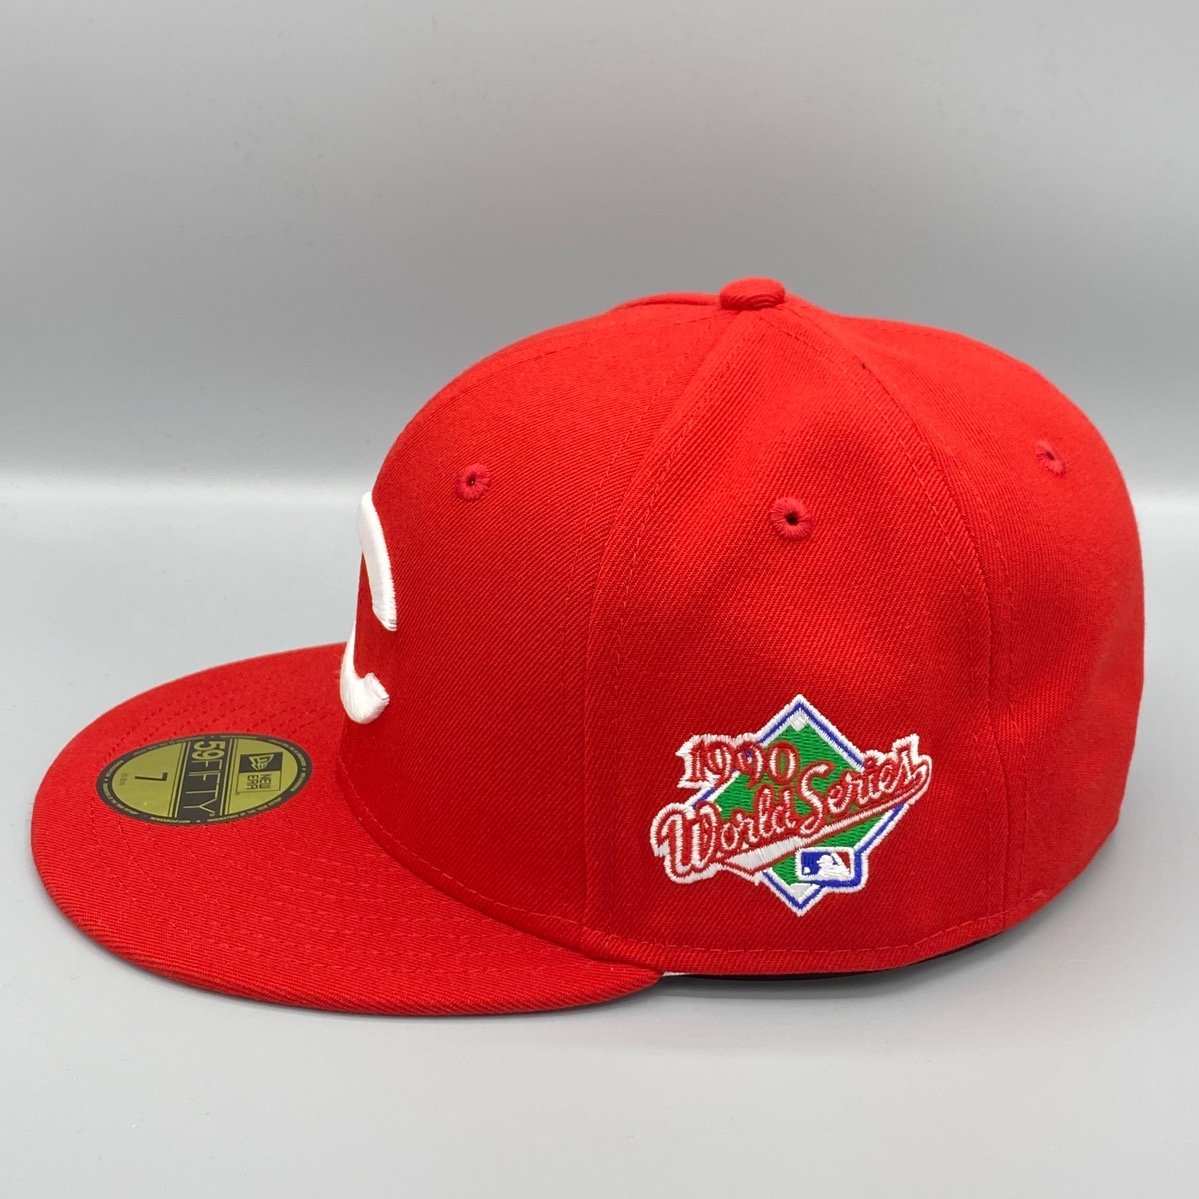 Vintage 90s Cincinnati Reds Hat 1957 Logo MLB Baseball Cap 